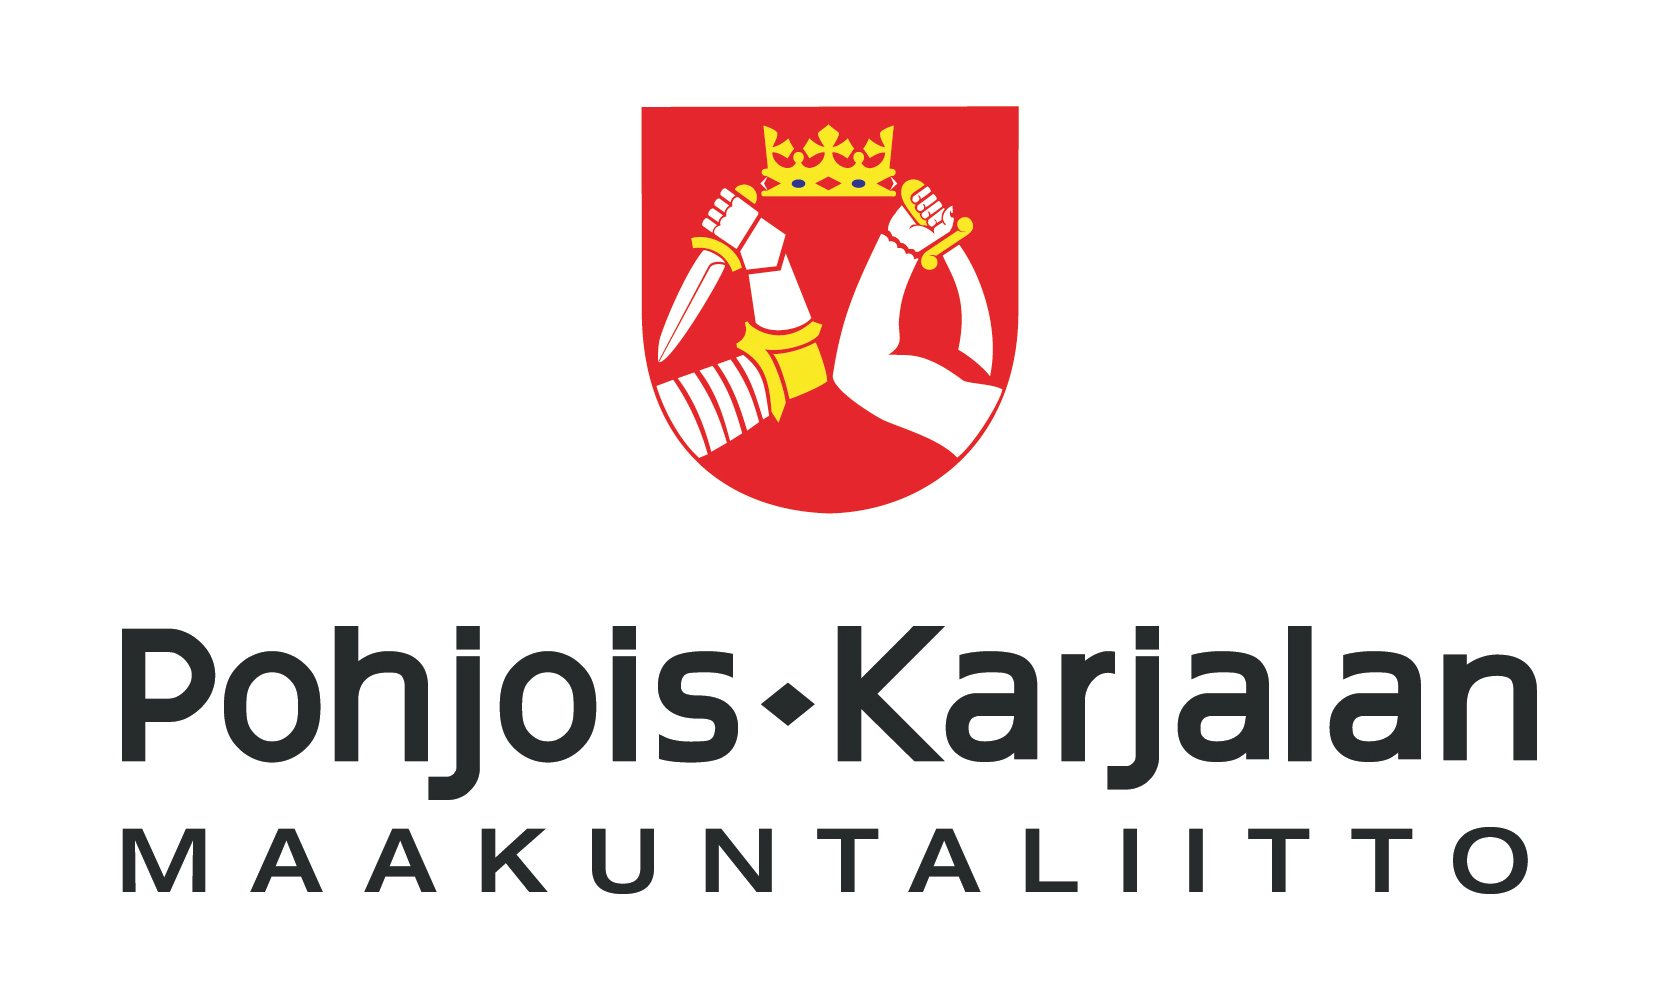 Pohjois-Karjalan maakuntaliiton logo.